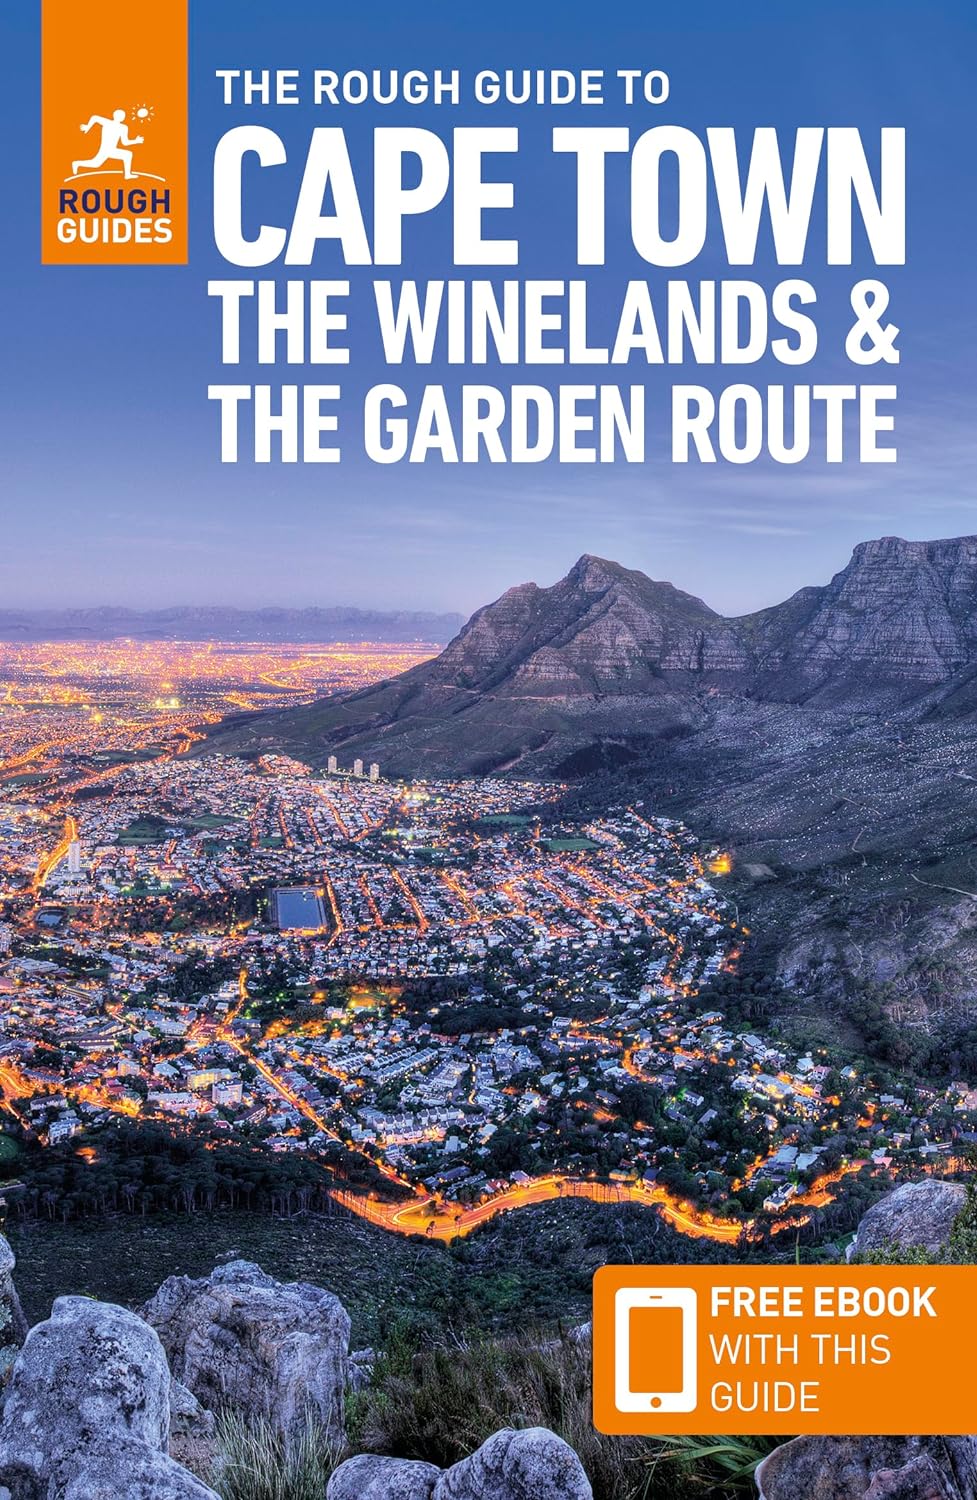 Online bestellen: Reisgids Cape Town, Winelands & Garden Route - Kaapstad | Rough Guides